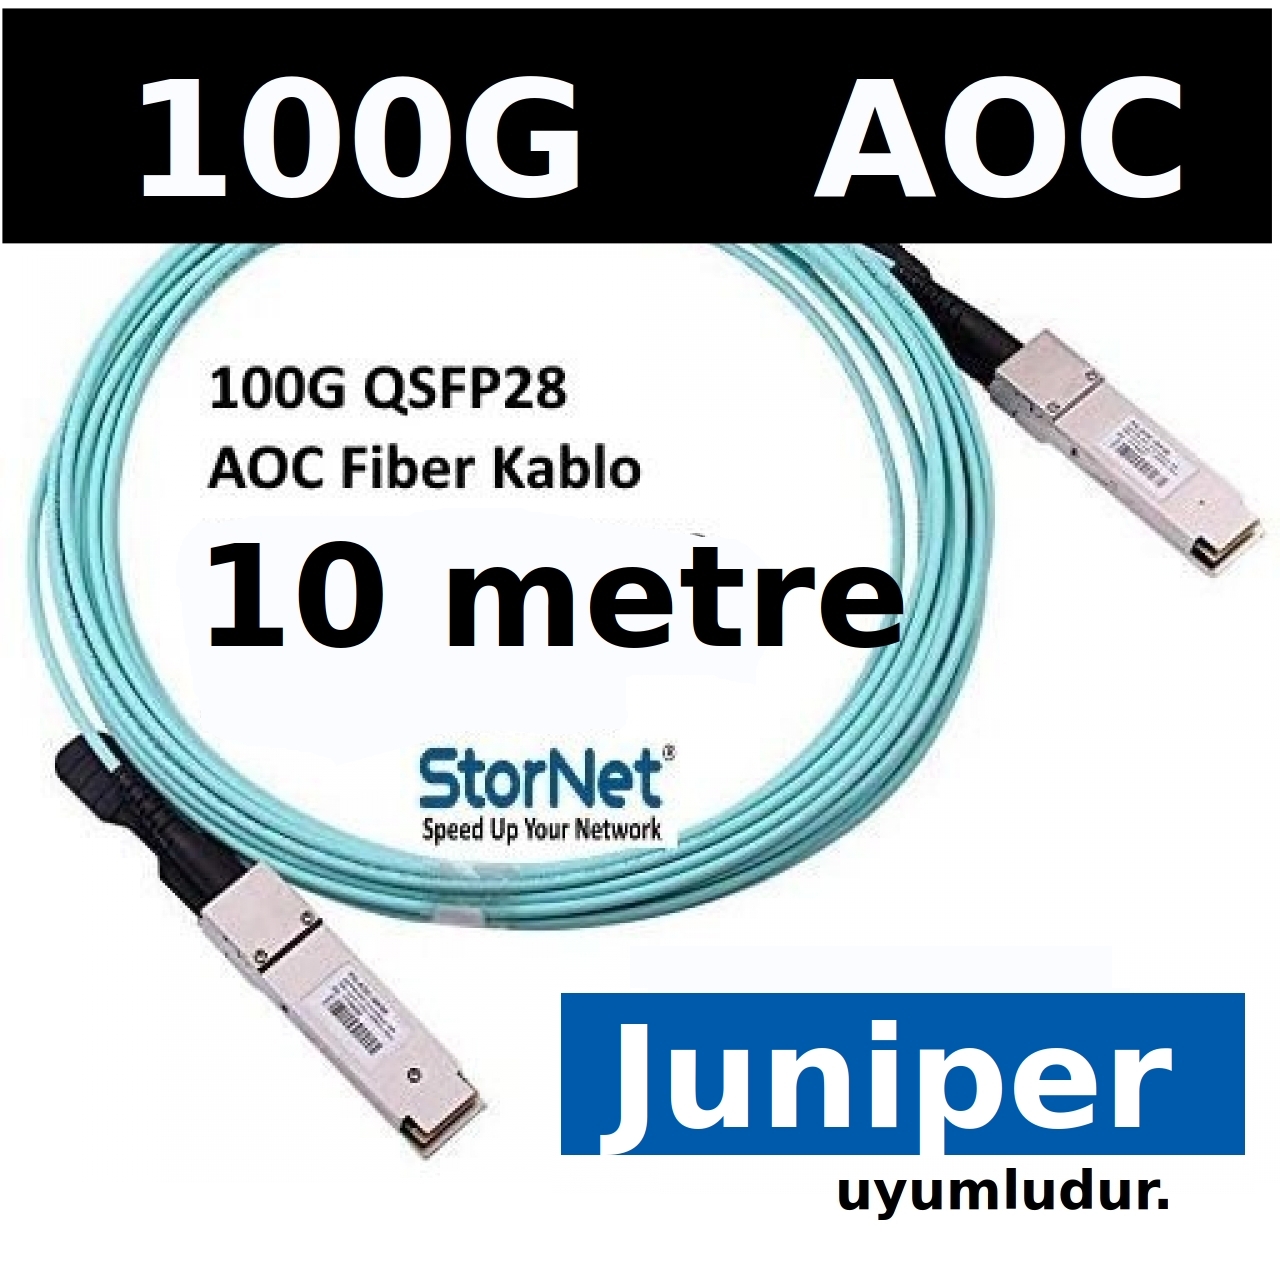 Juniper JNP-100G-AOC-10M uyumlu 10 metre 100G QSFP Active Optical Cable Kablo